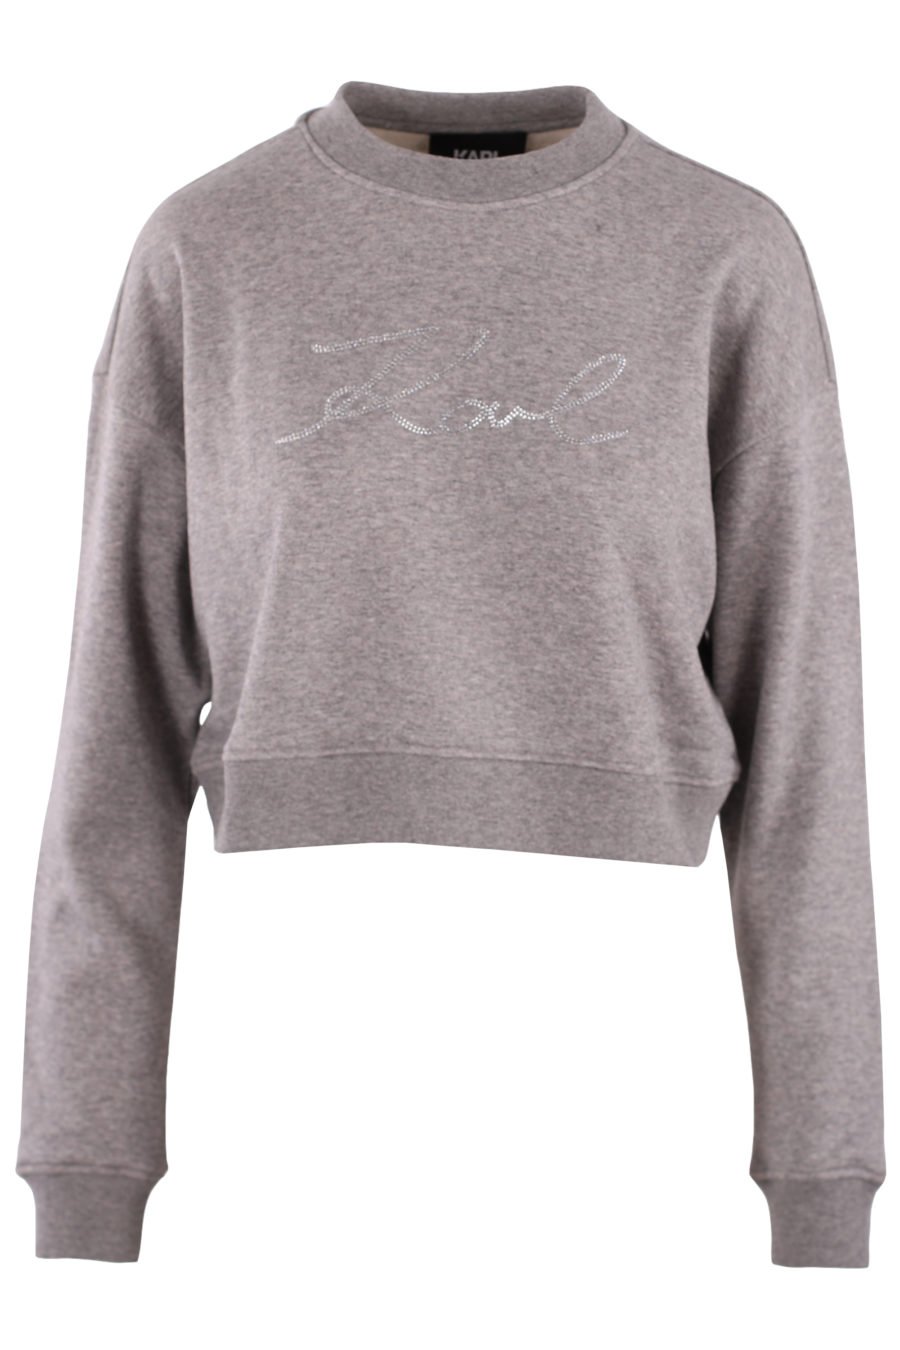 Grey short sweatshirt with crystals logo - IMG 9550